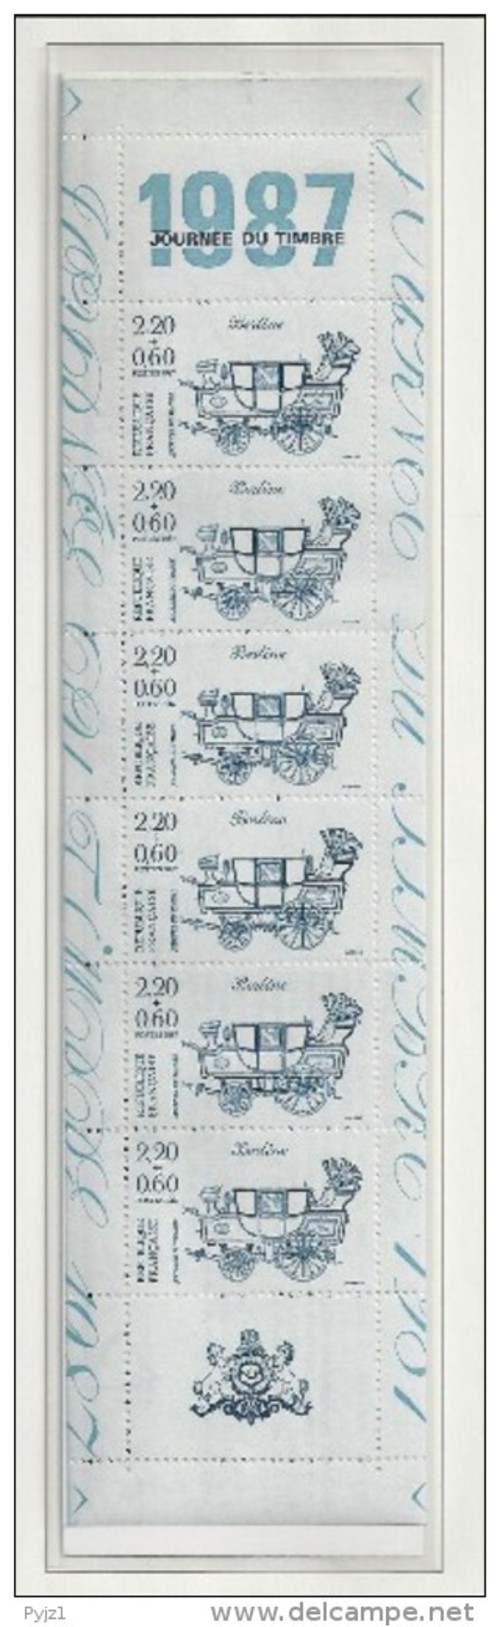 1987  MNH France Carnet/booklet, Postfris - Stamp Day